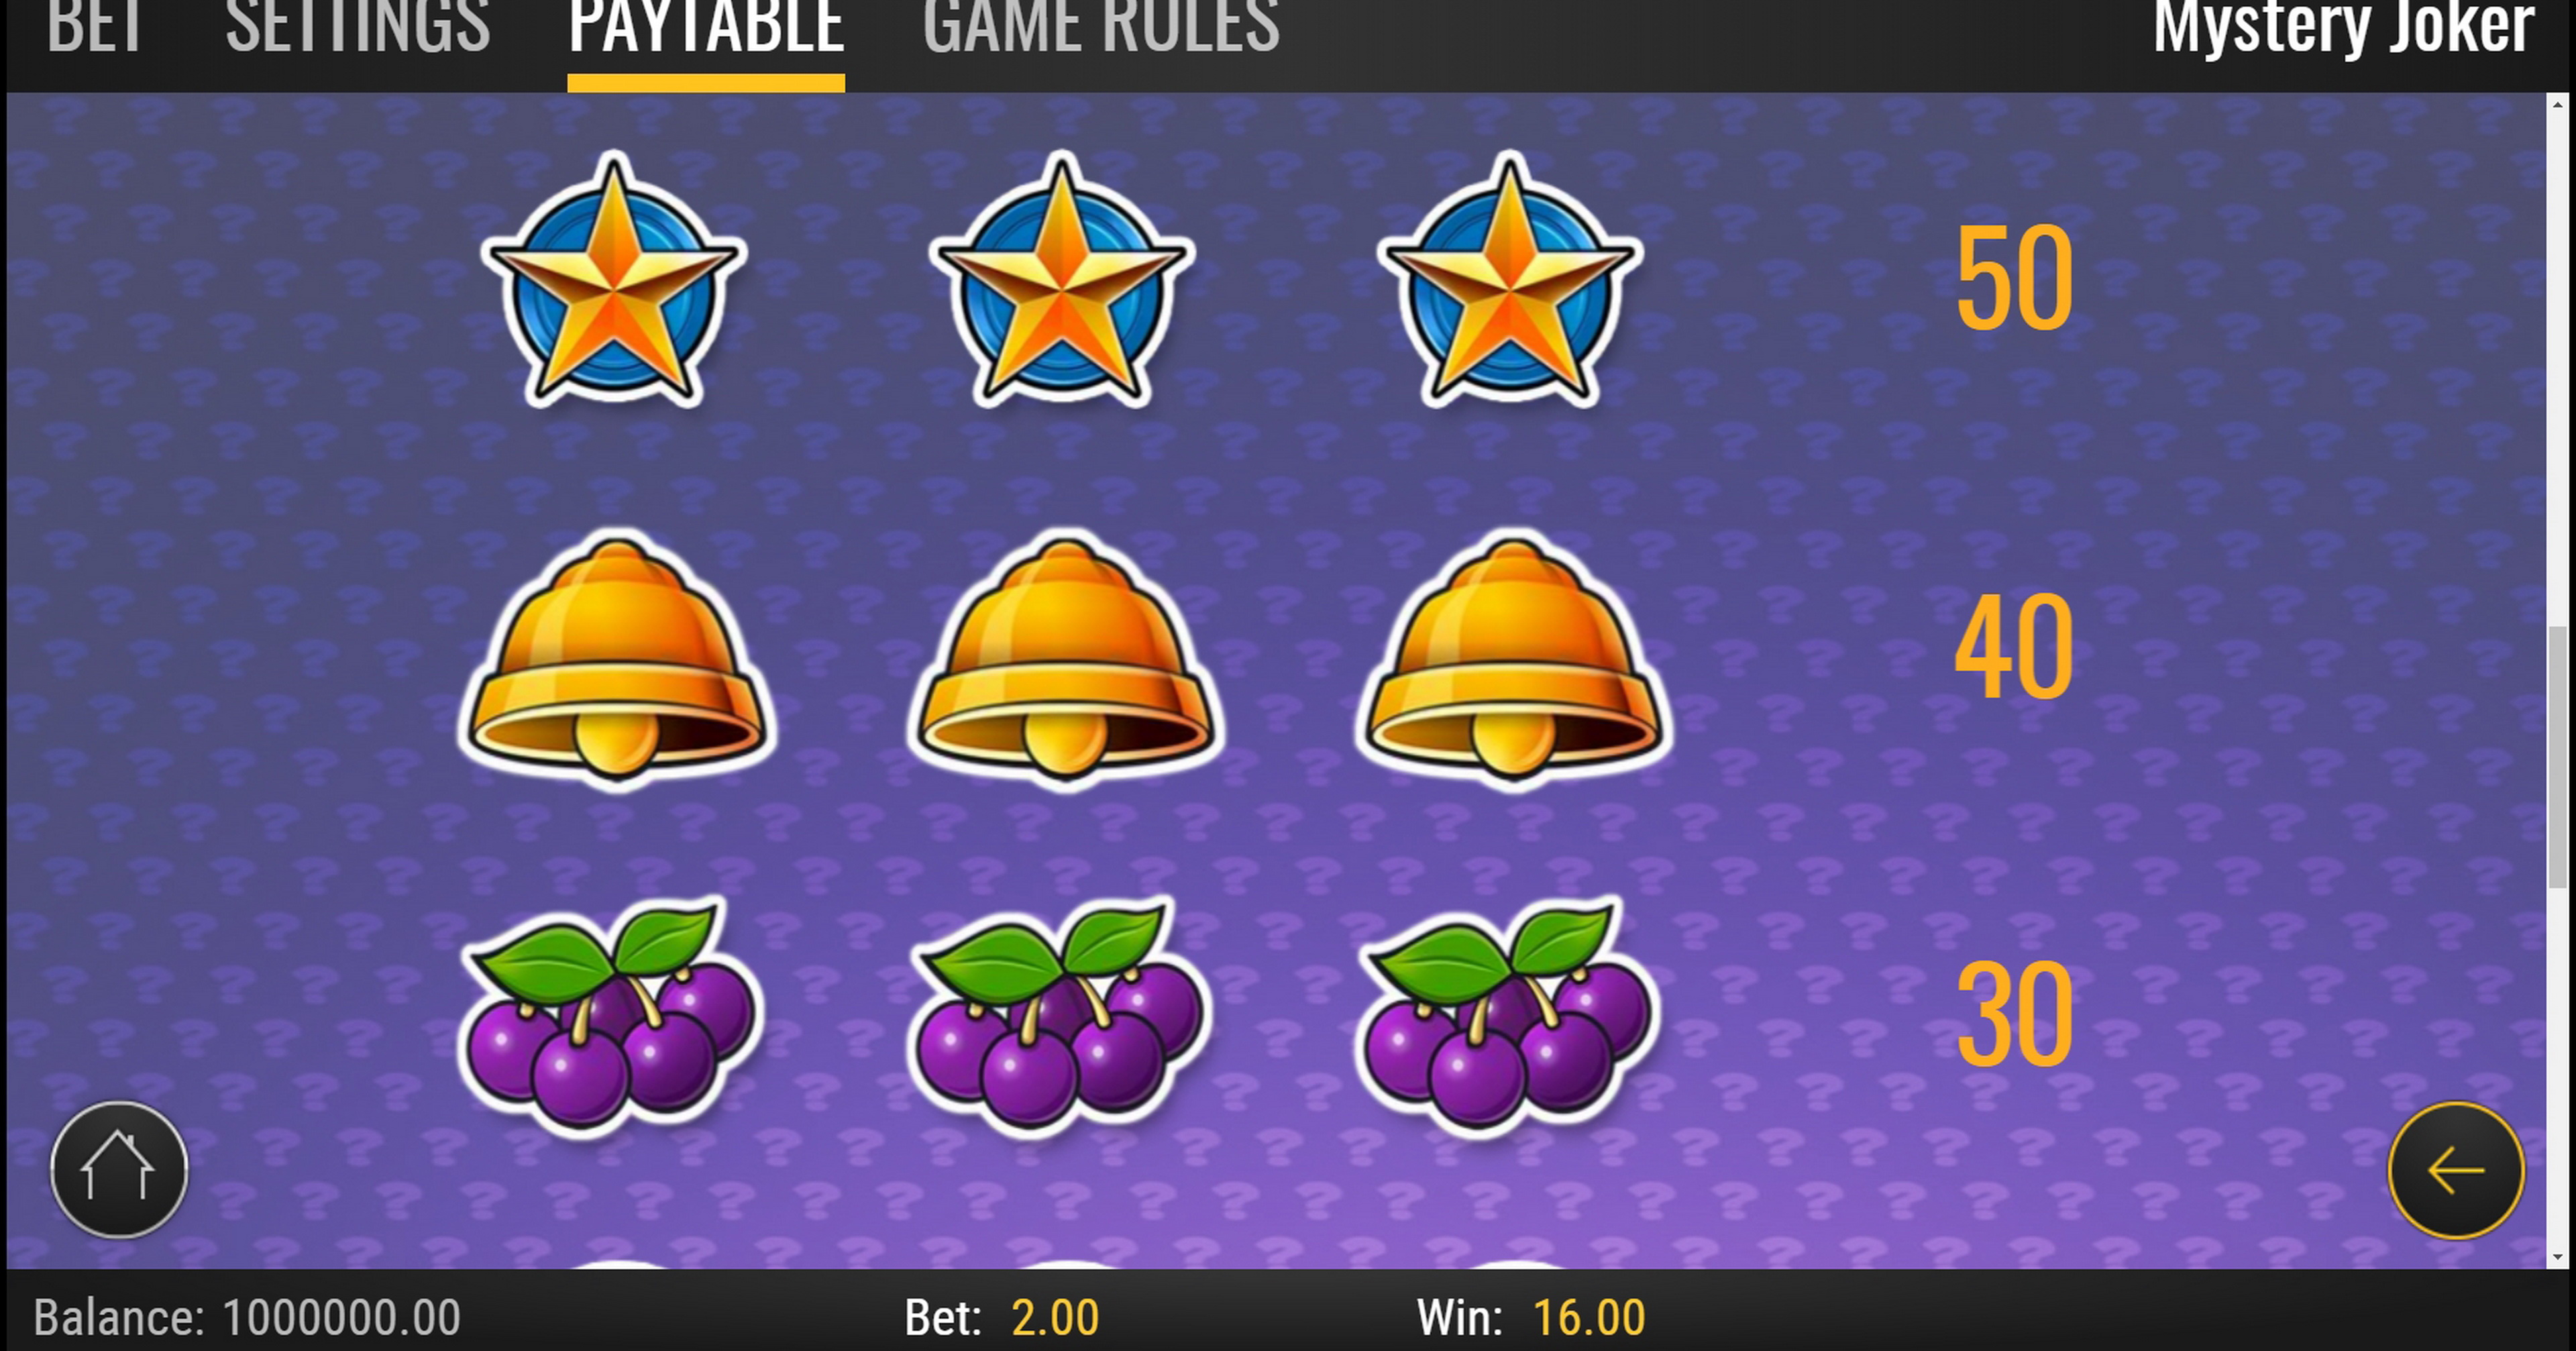 Info of Mystery Joker Slot Game by Playn GO